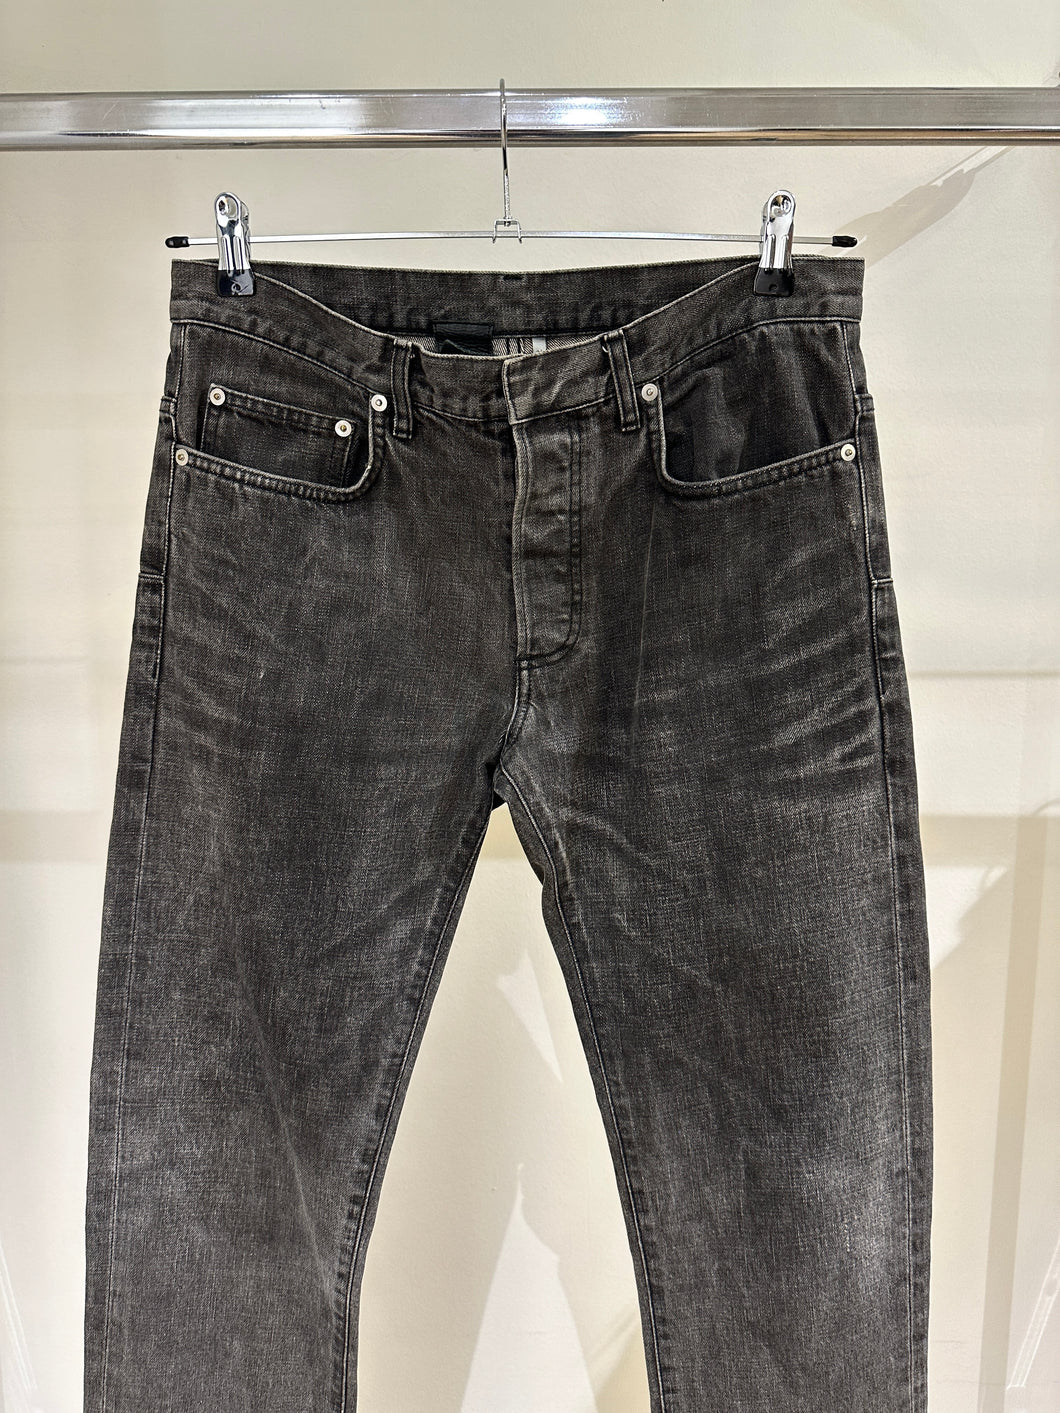 AW2003 Dior by Hedi Slimane clawmark jeans